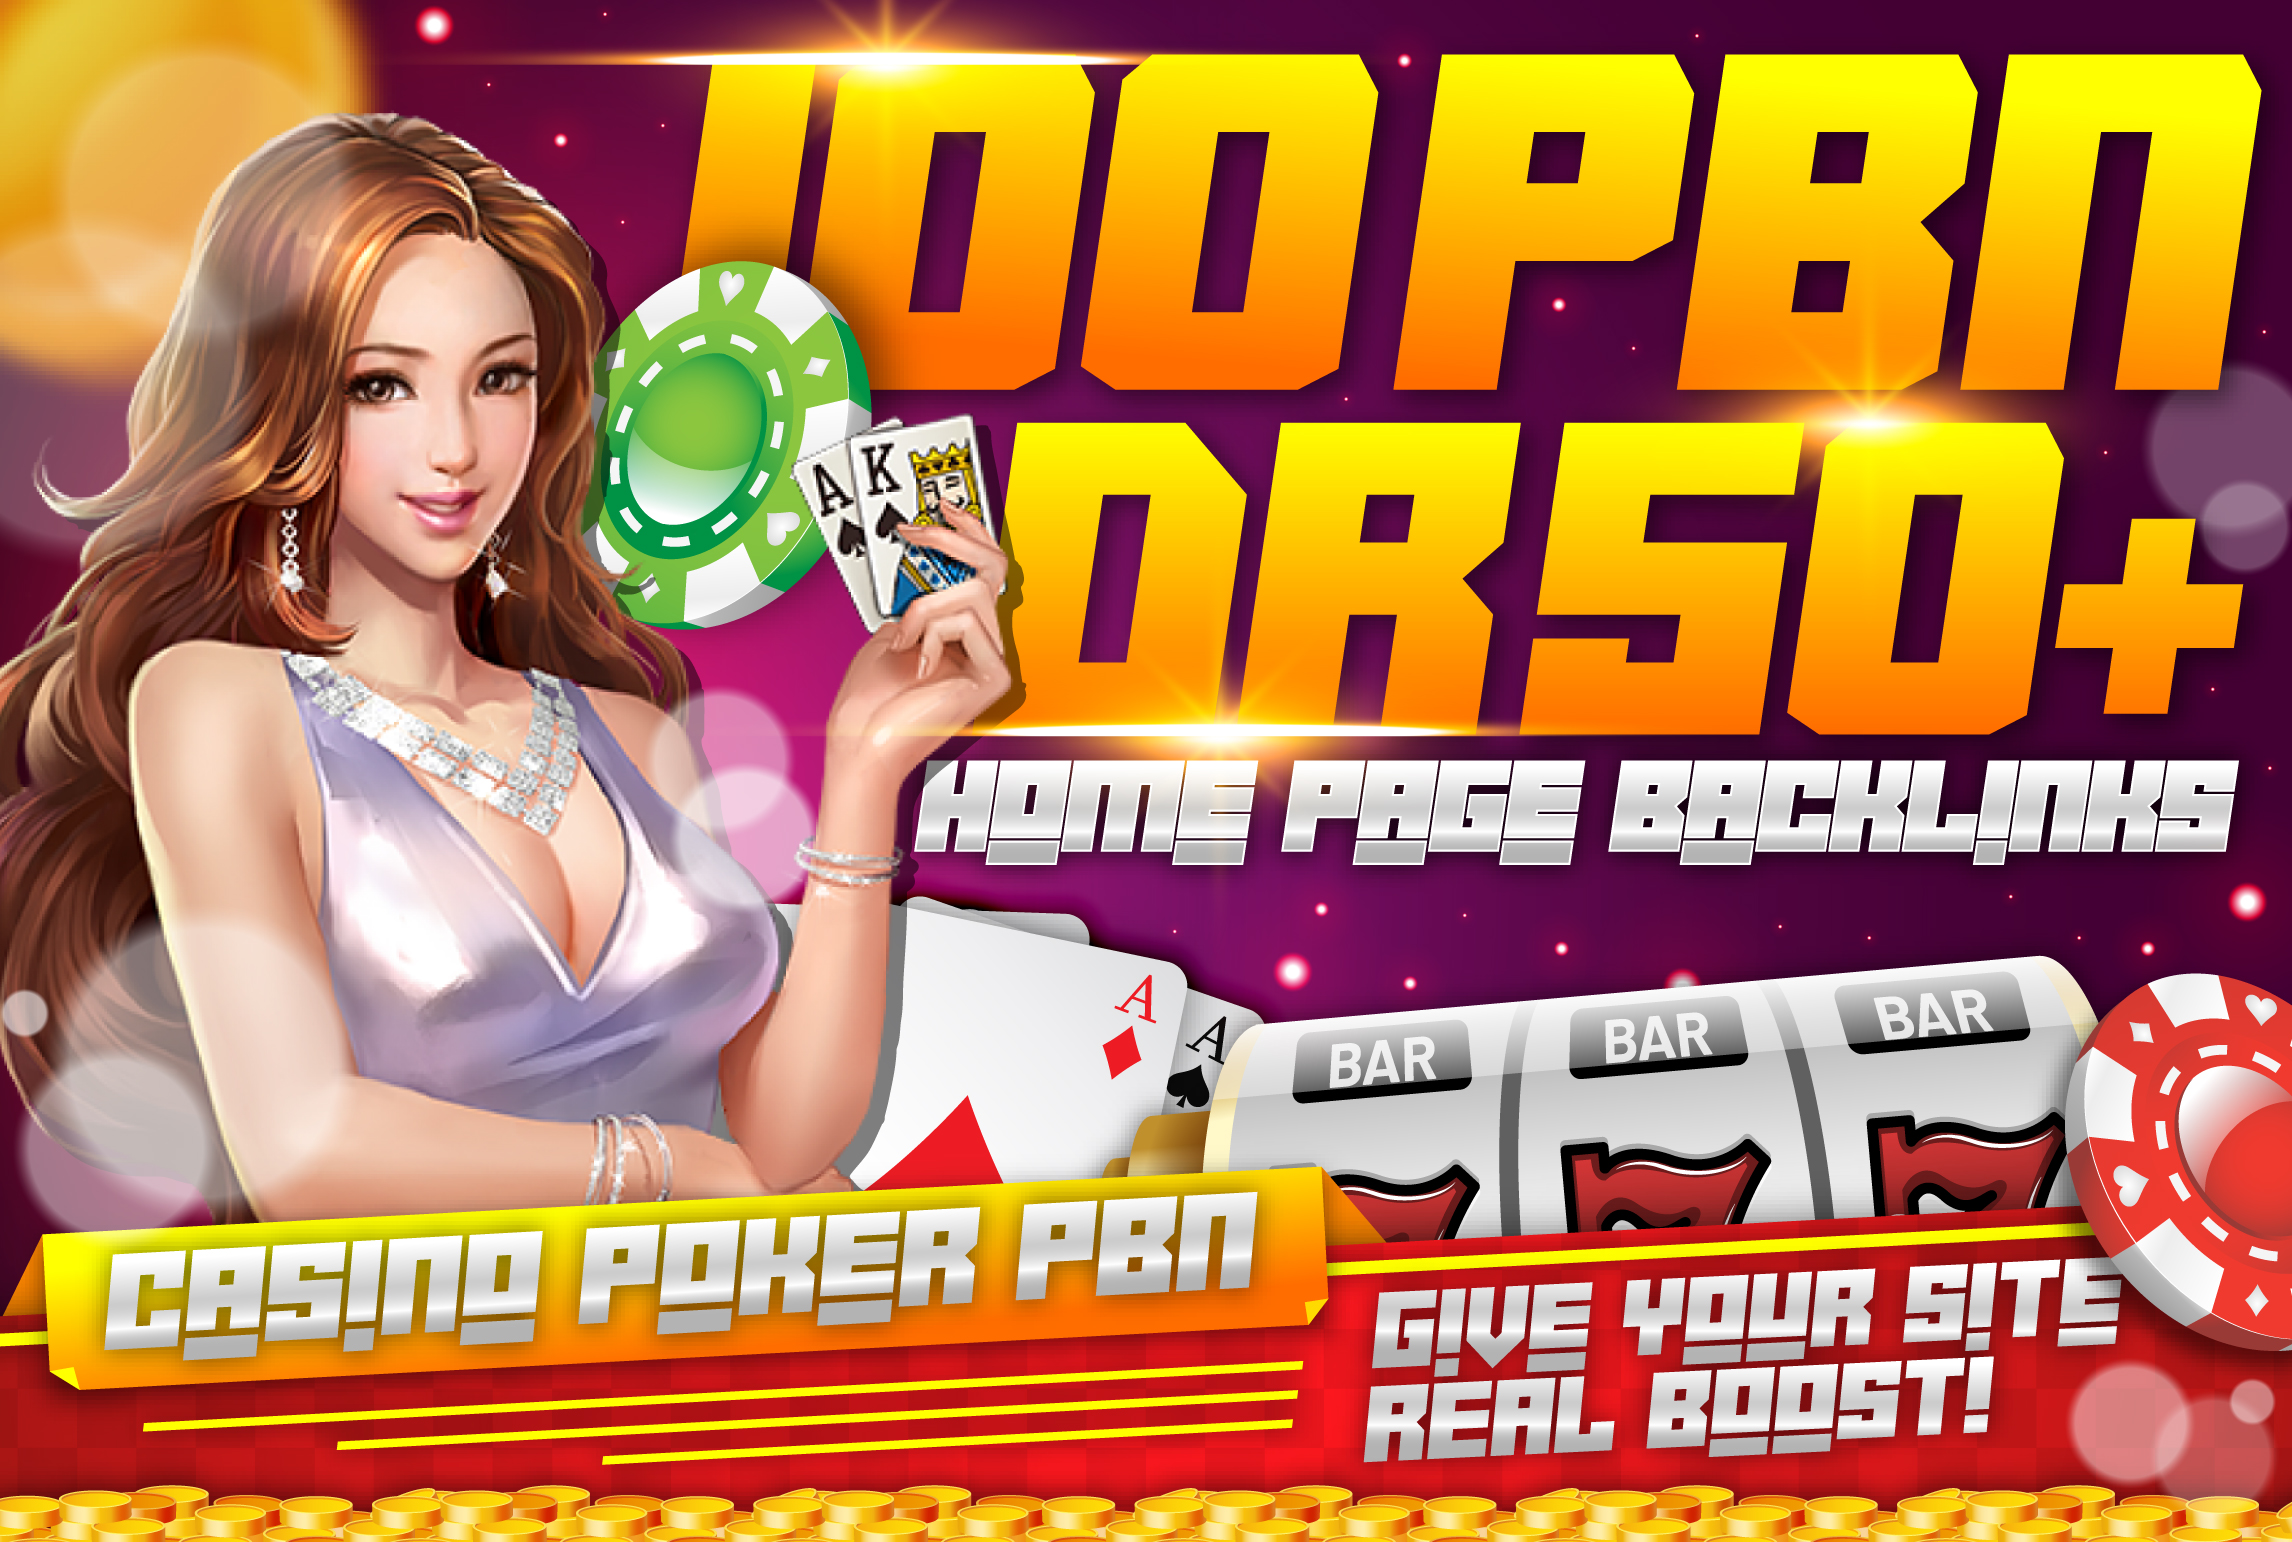 Casino Poker Gambling 100 PBN with high DR 50+ Low Spam Score do-follow permanent backlinks